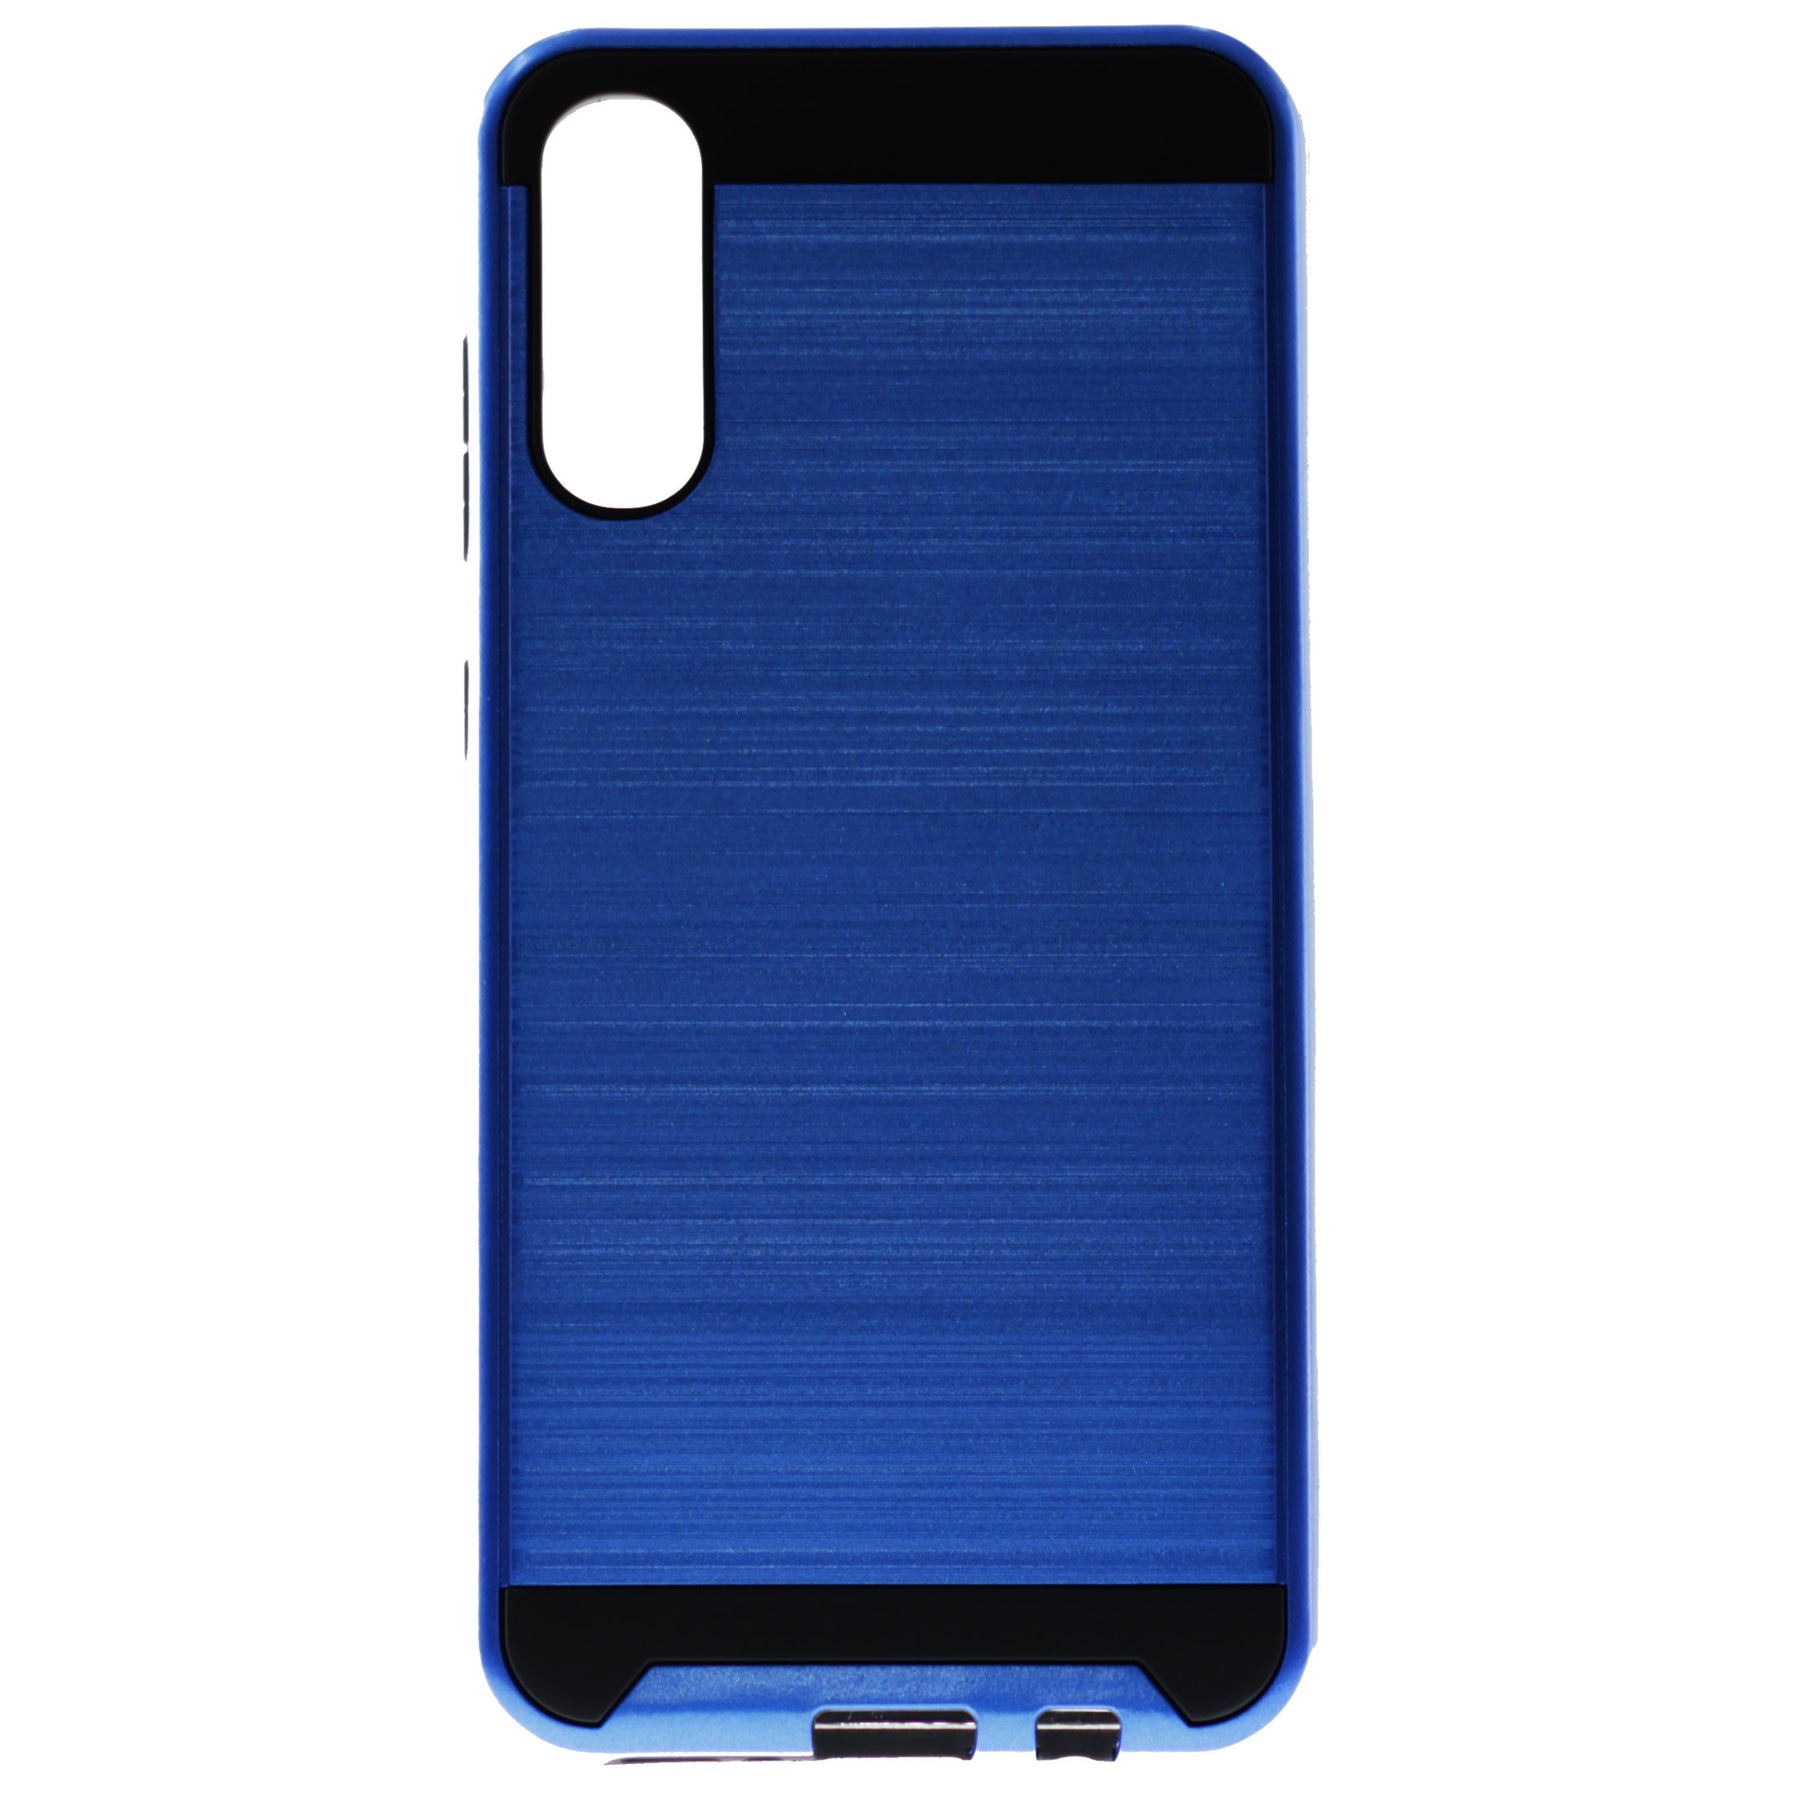 Samsung A70 blue slim case